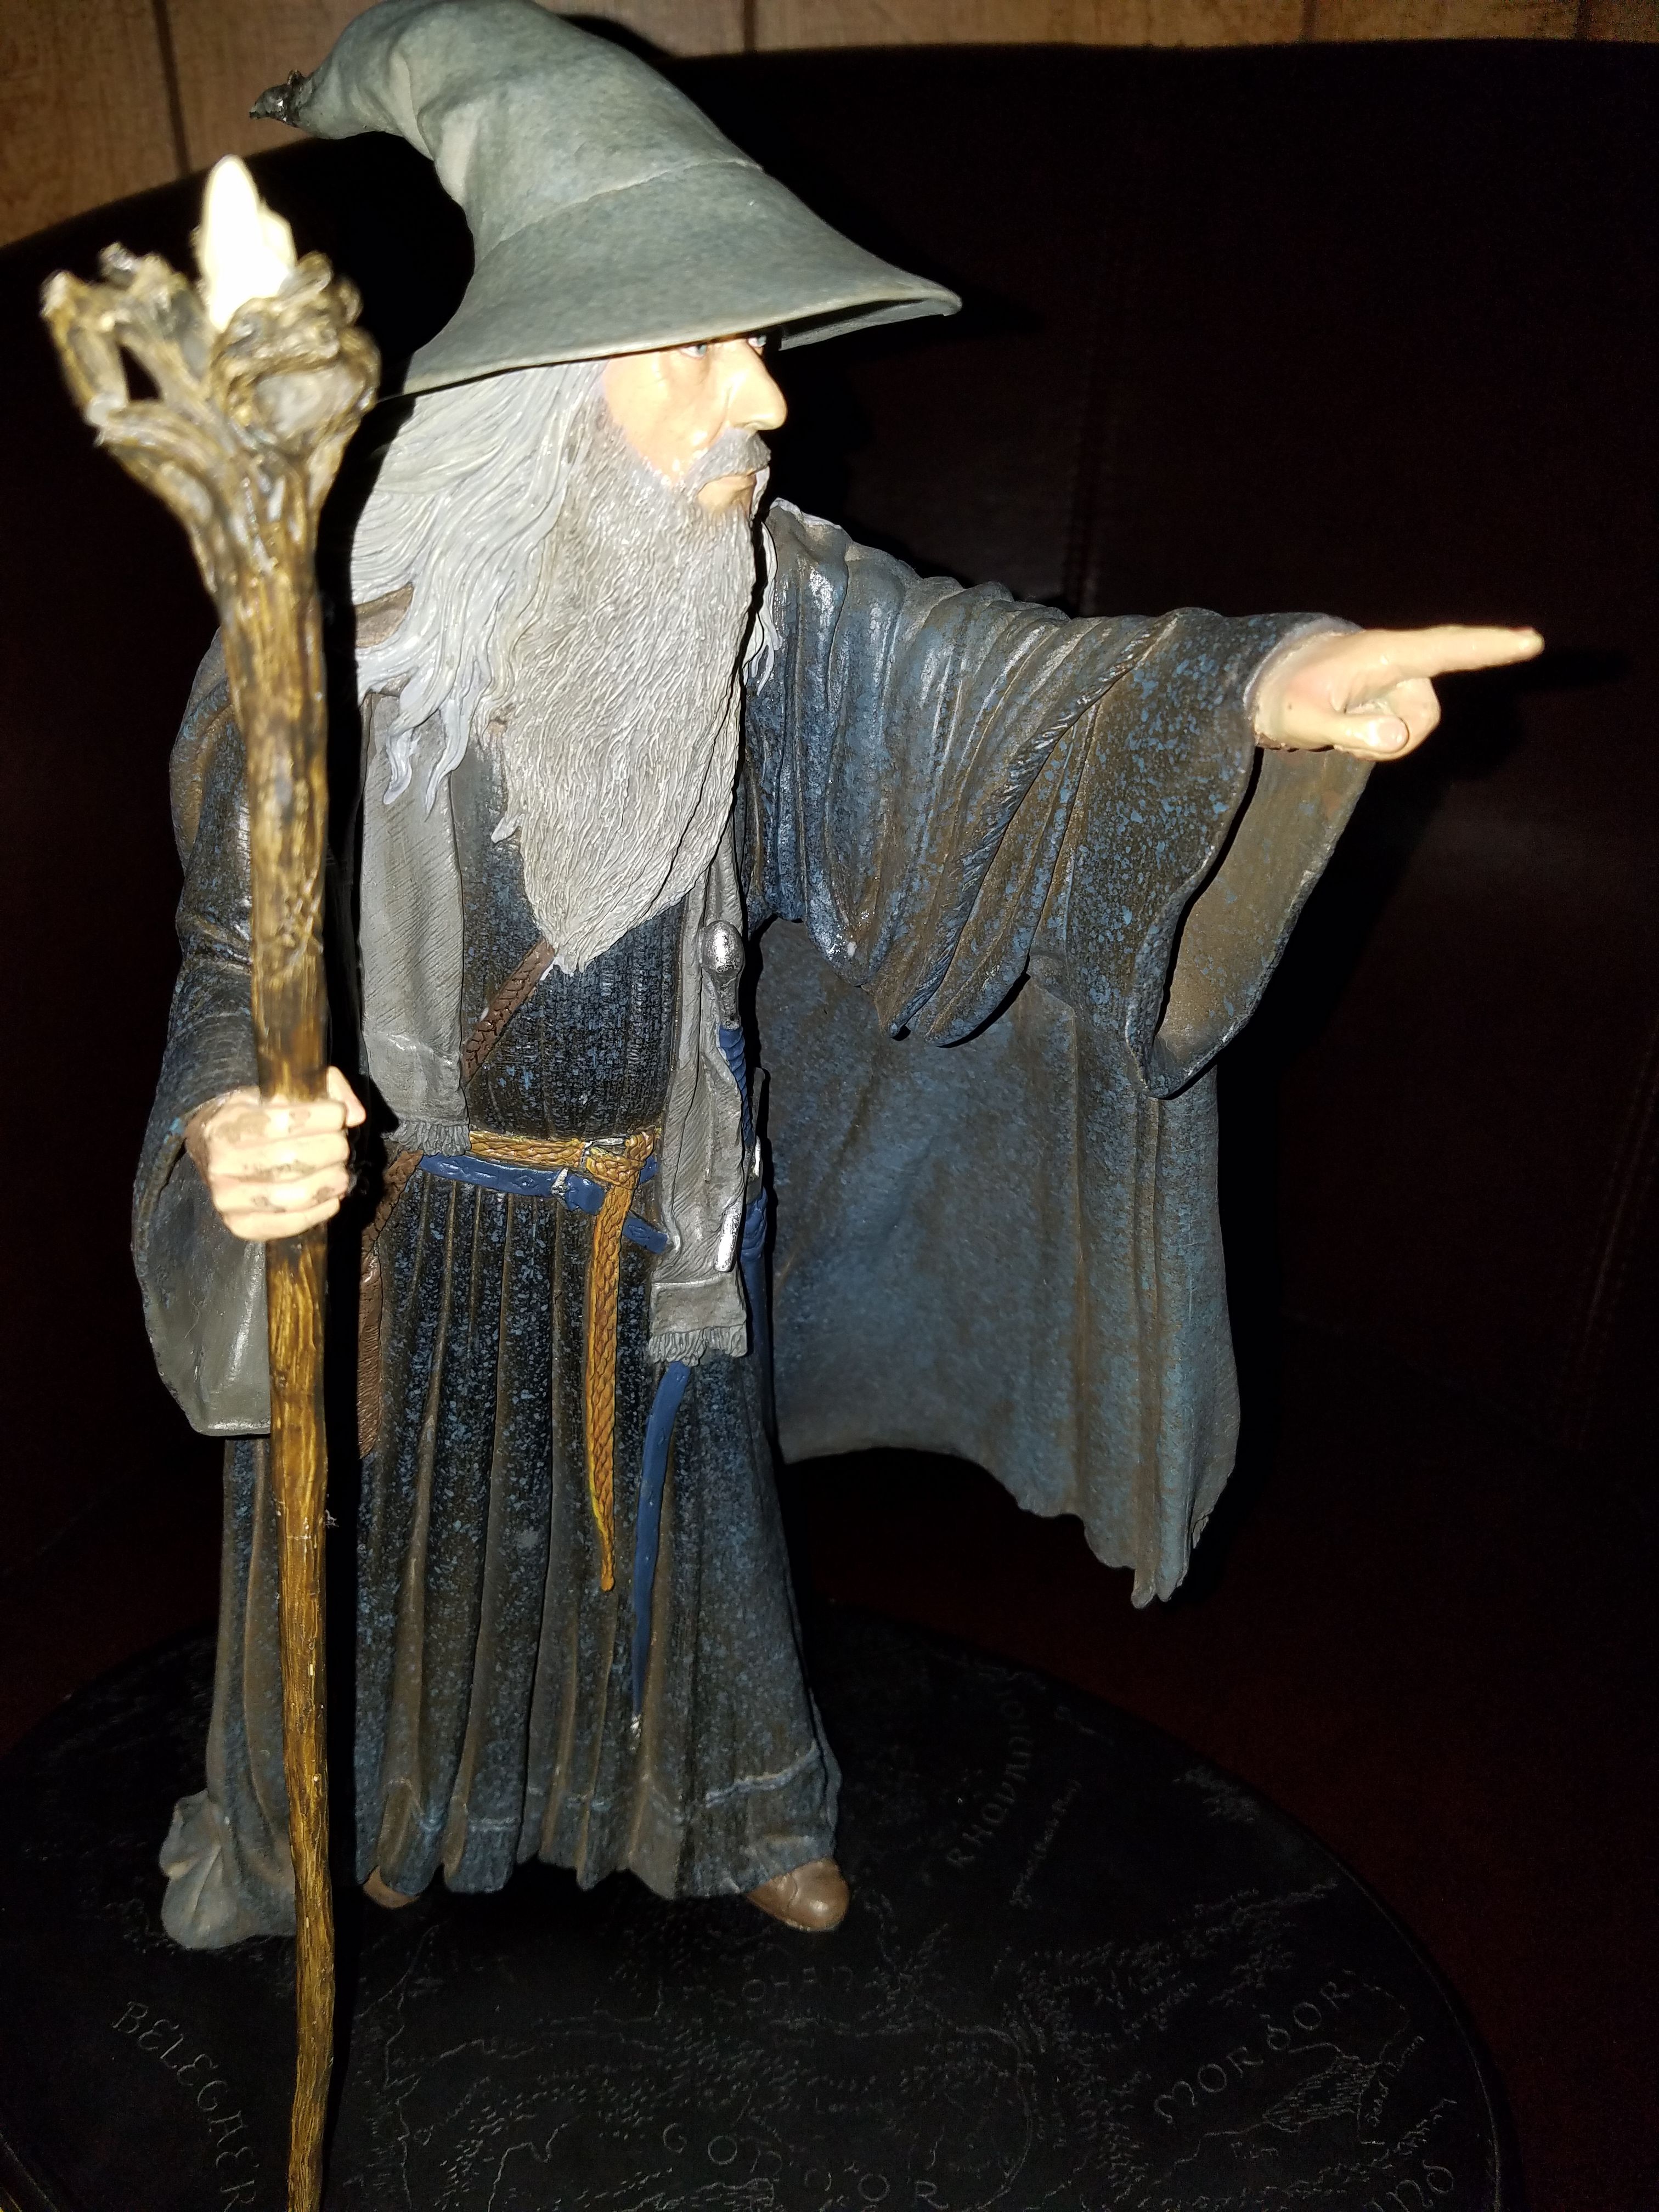 Gandalf the Grey collectors figurine